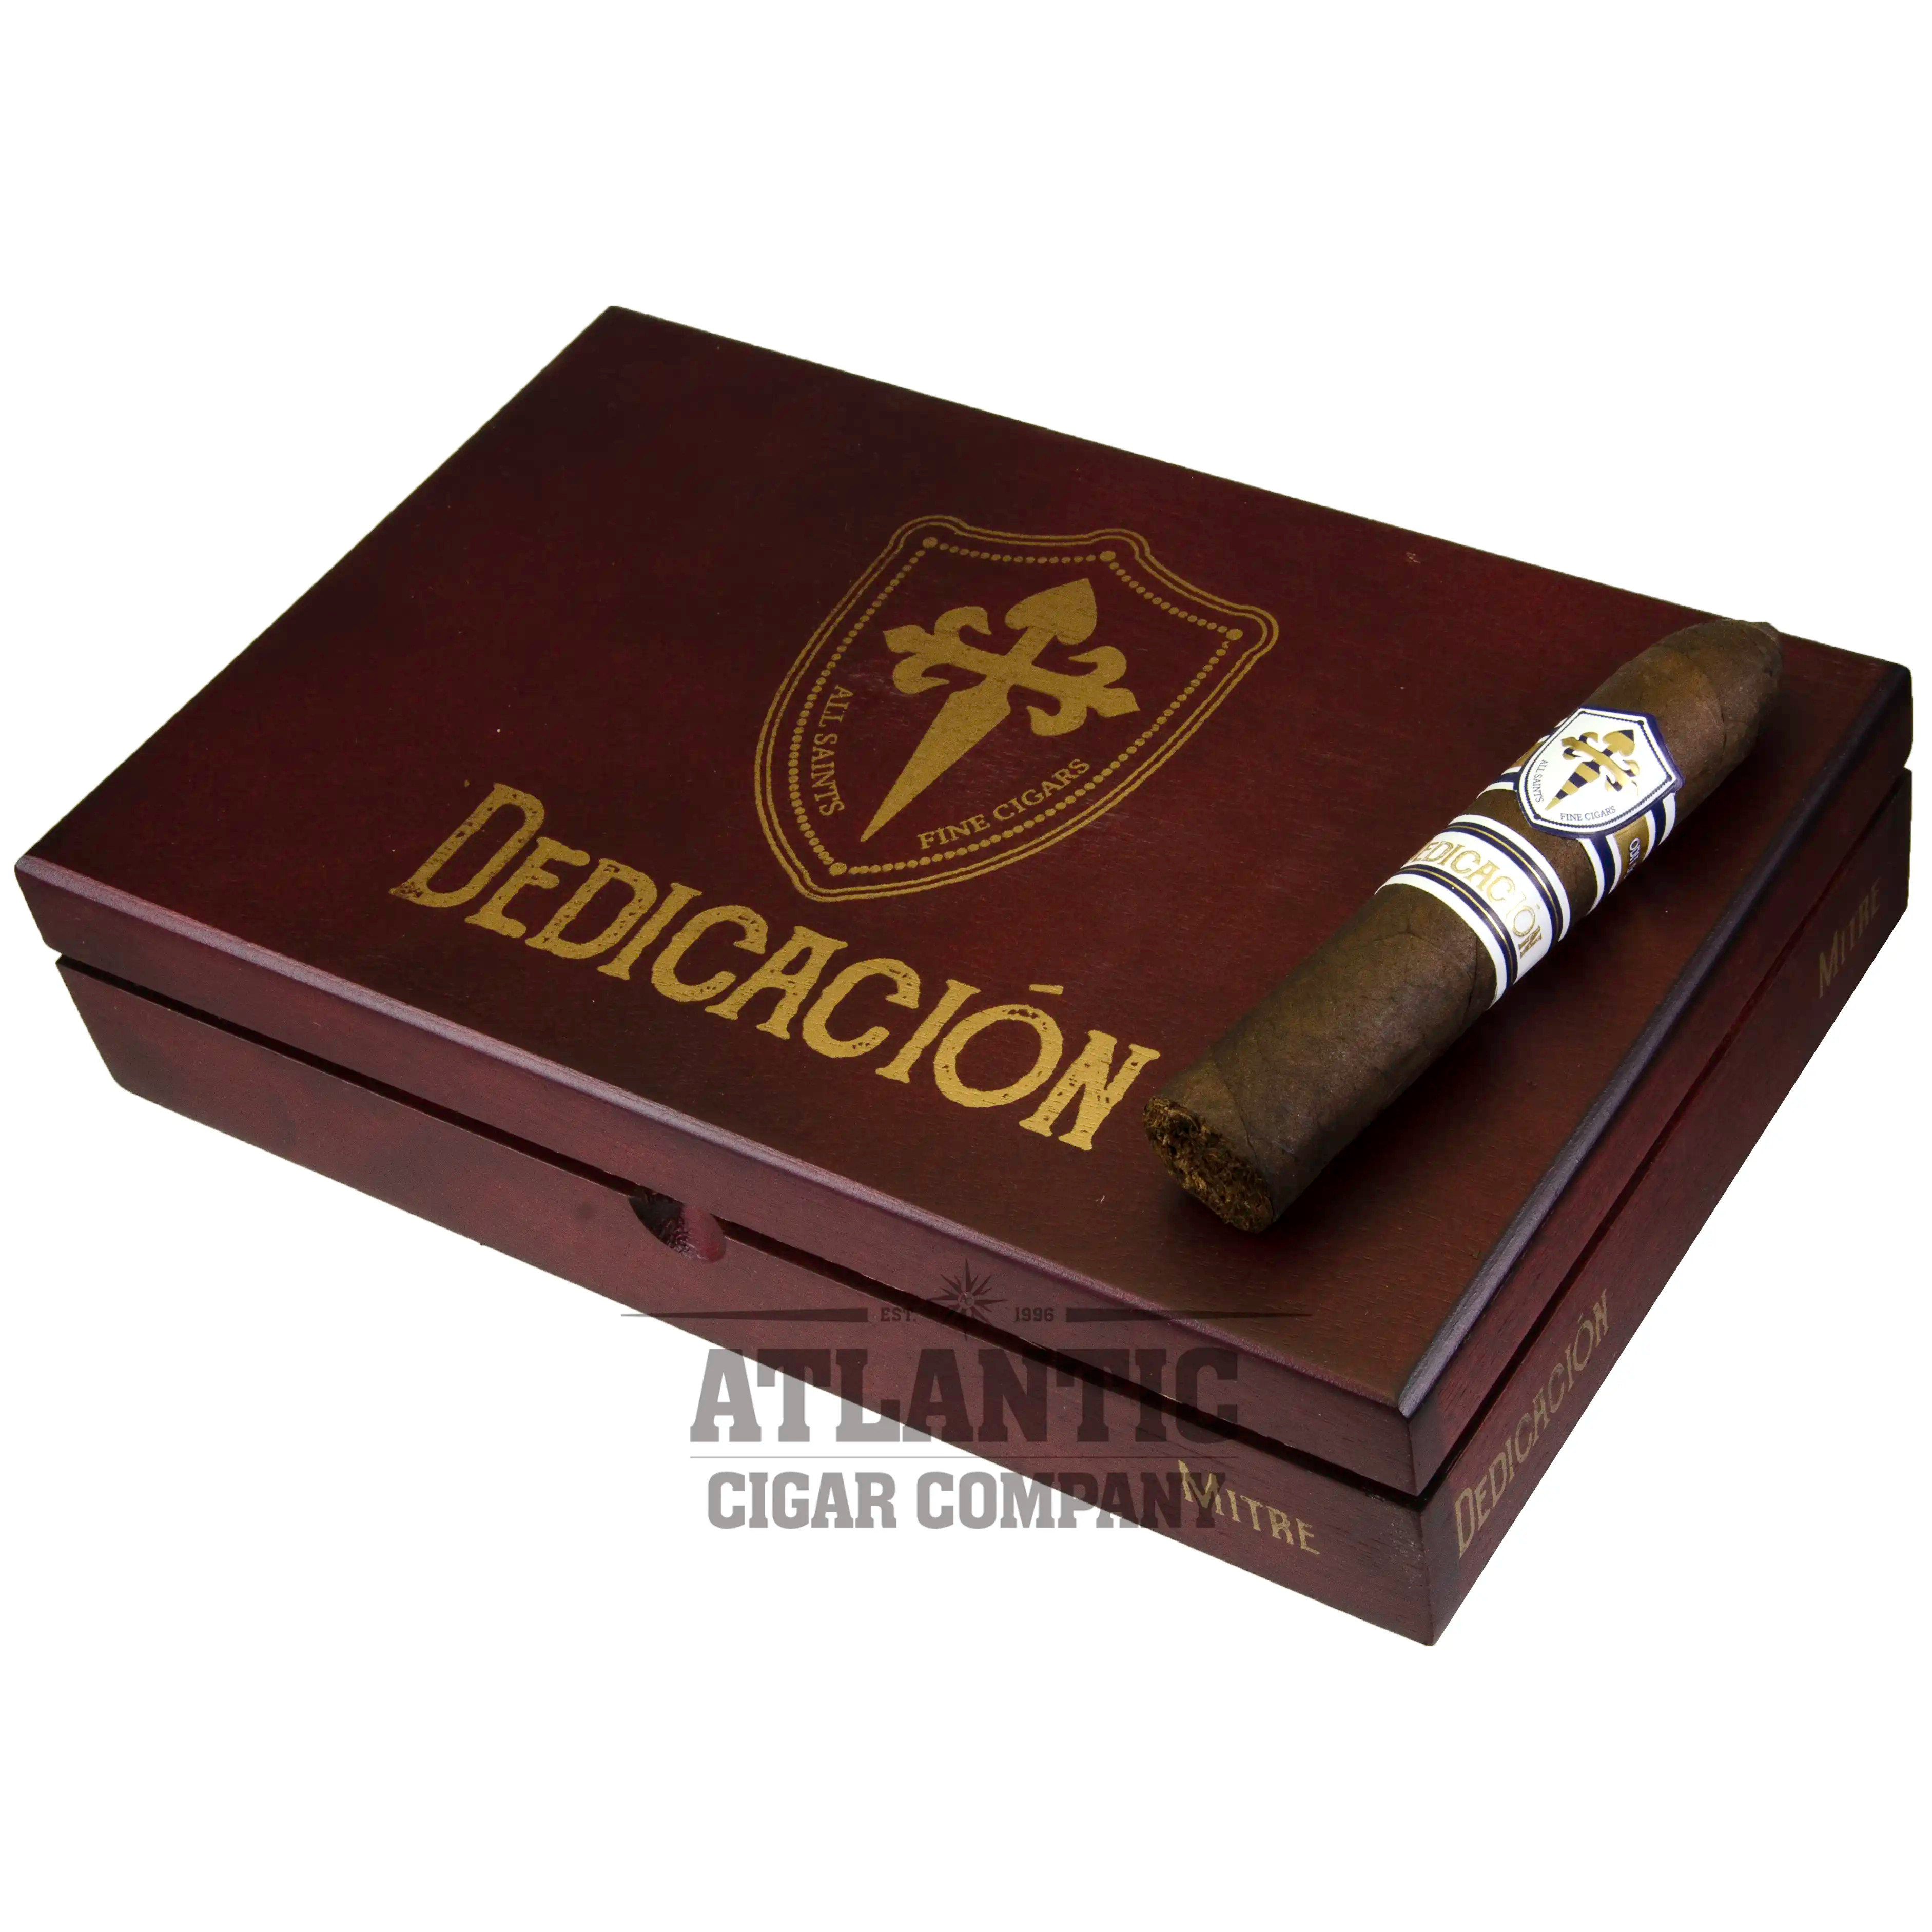 All Saints Dedicacion Cigars Mitre (5x54) Torpedo Round